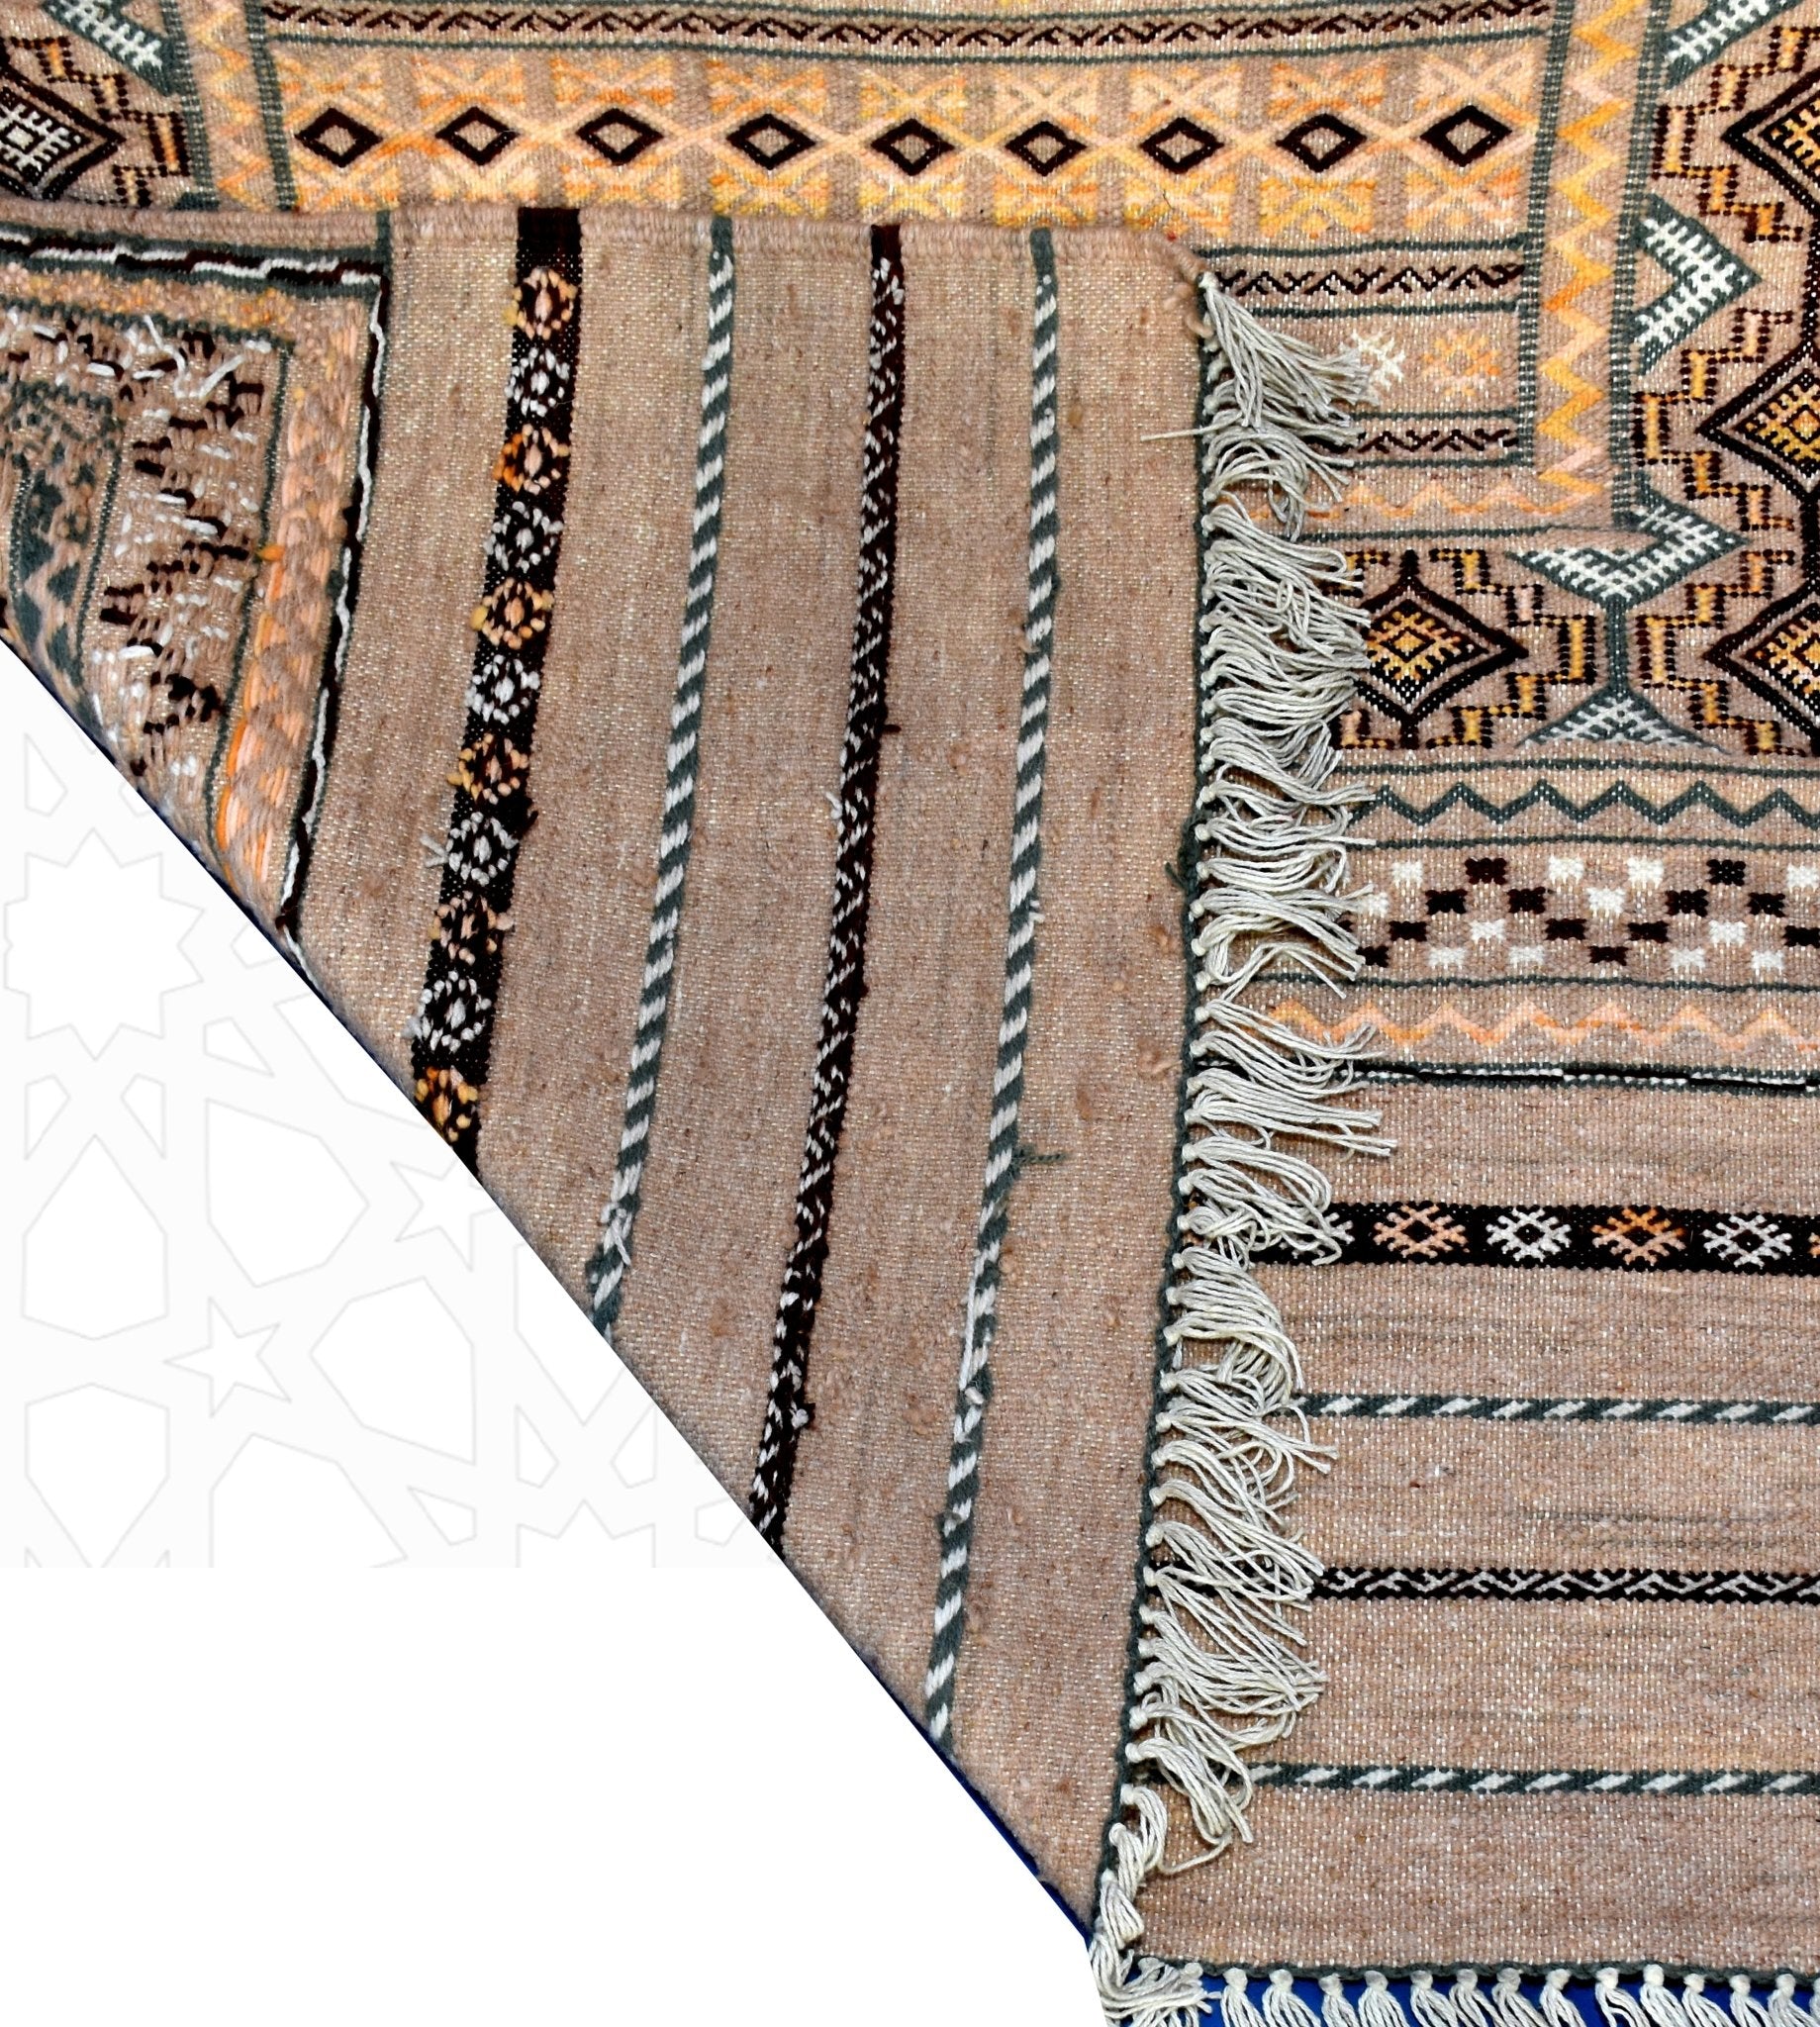 Flatweave kilim hanbal Moroccan rug - 4.11 x 6.57 ft / 125 x 200 cm - Berbers Market